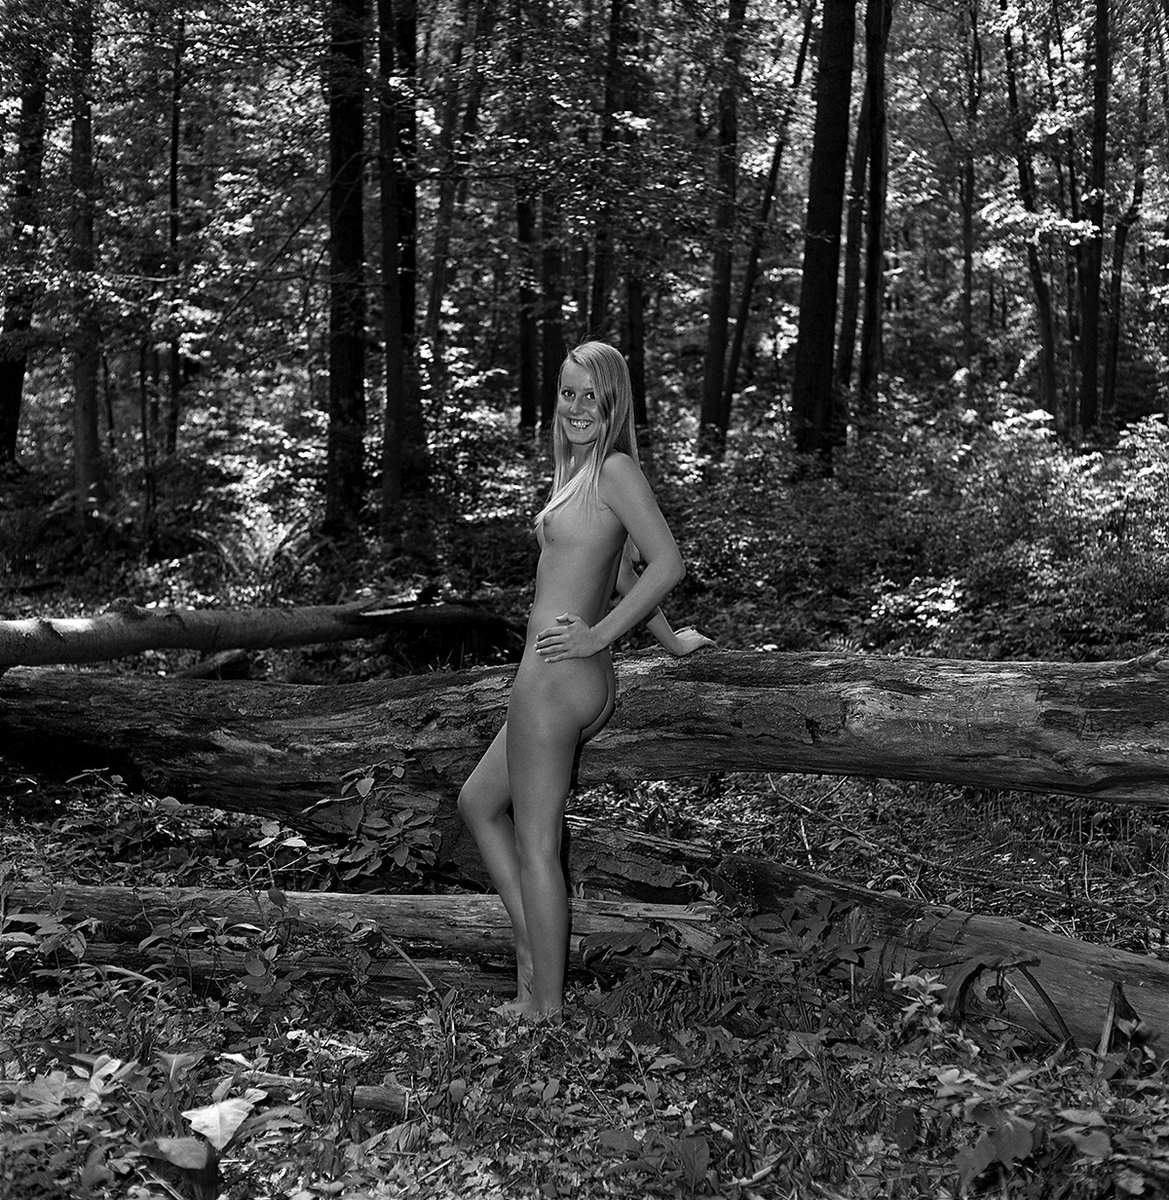 Medium format film scan of 1960s nudist Linda Shockley. 